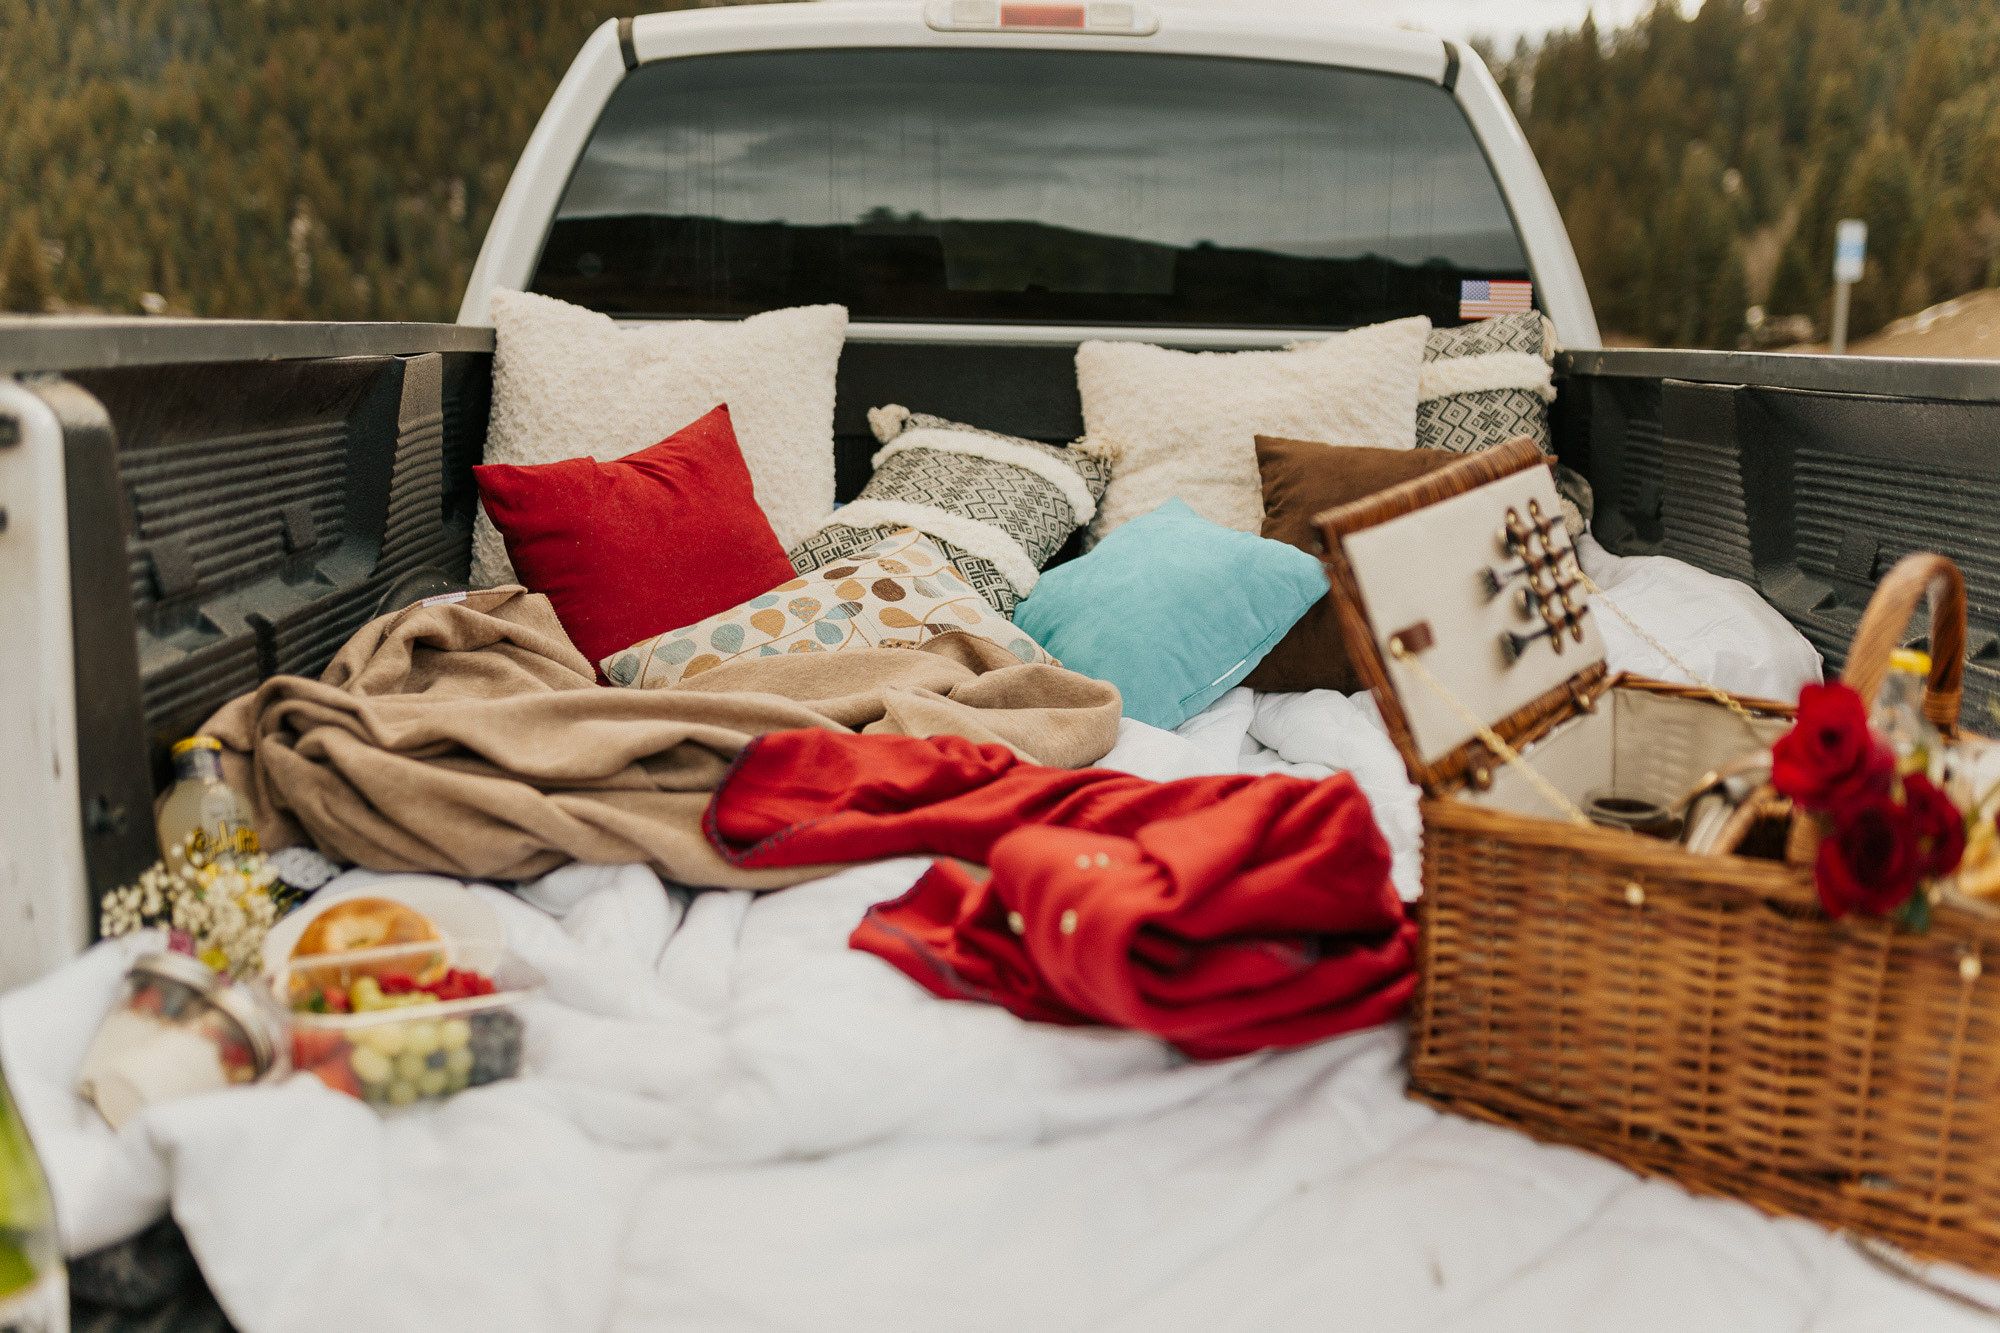 Pick-up truck picnic